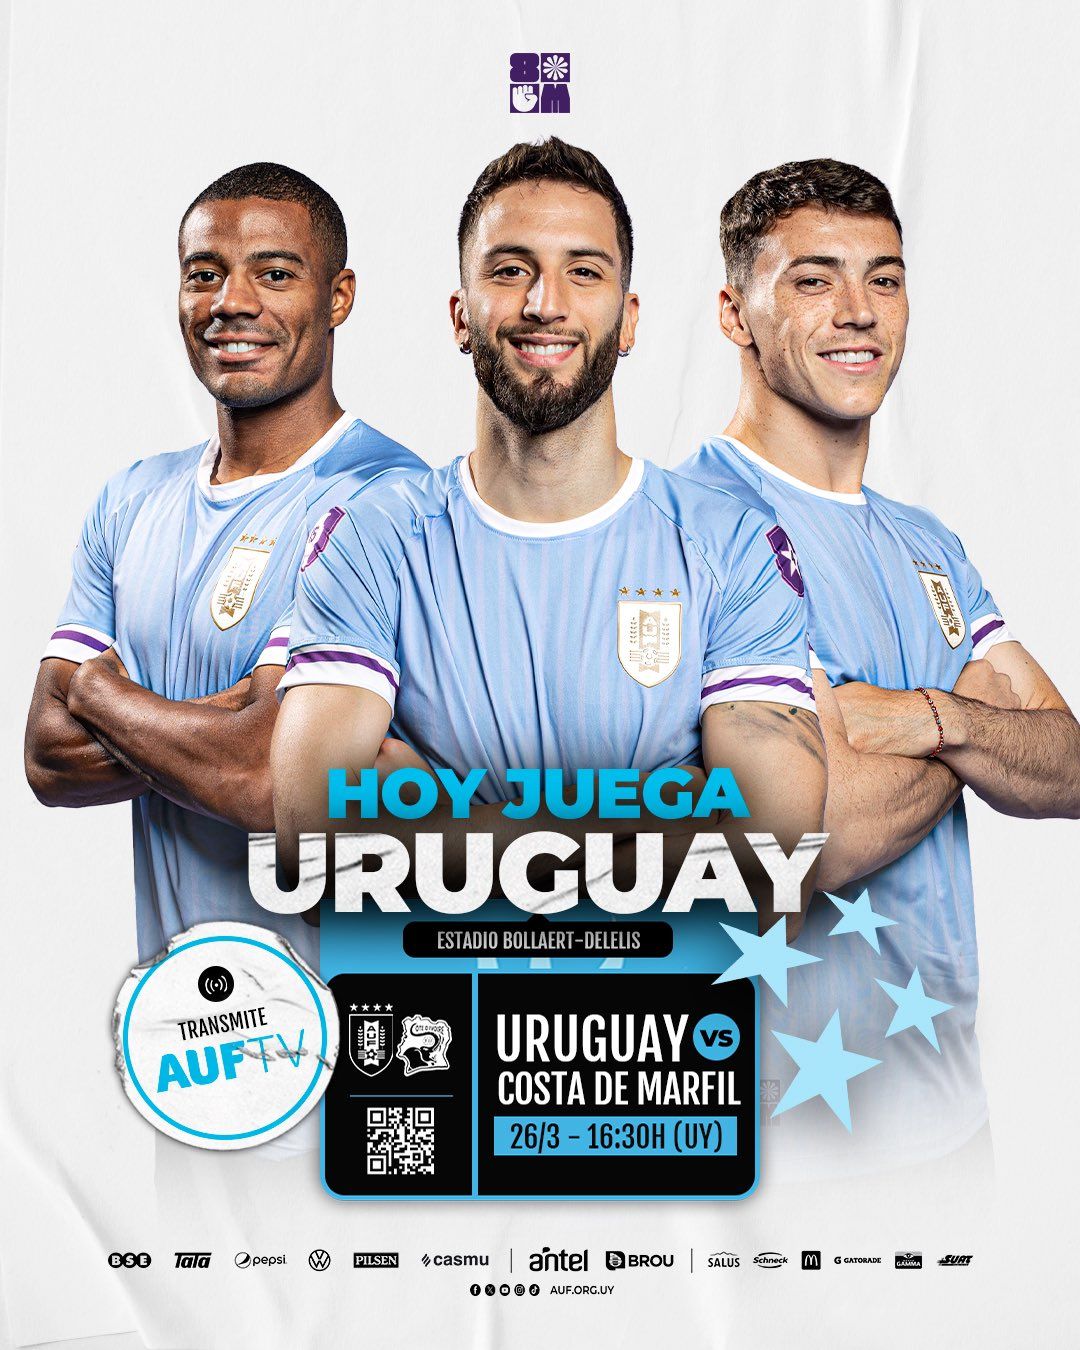 Uruguay vs Costa de Marfil